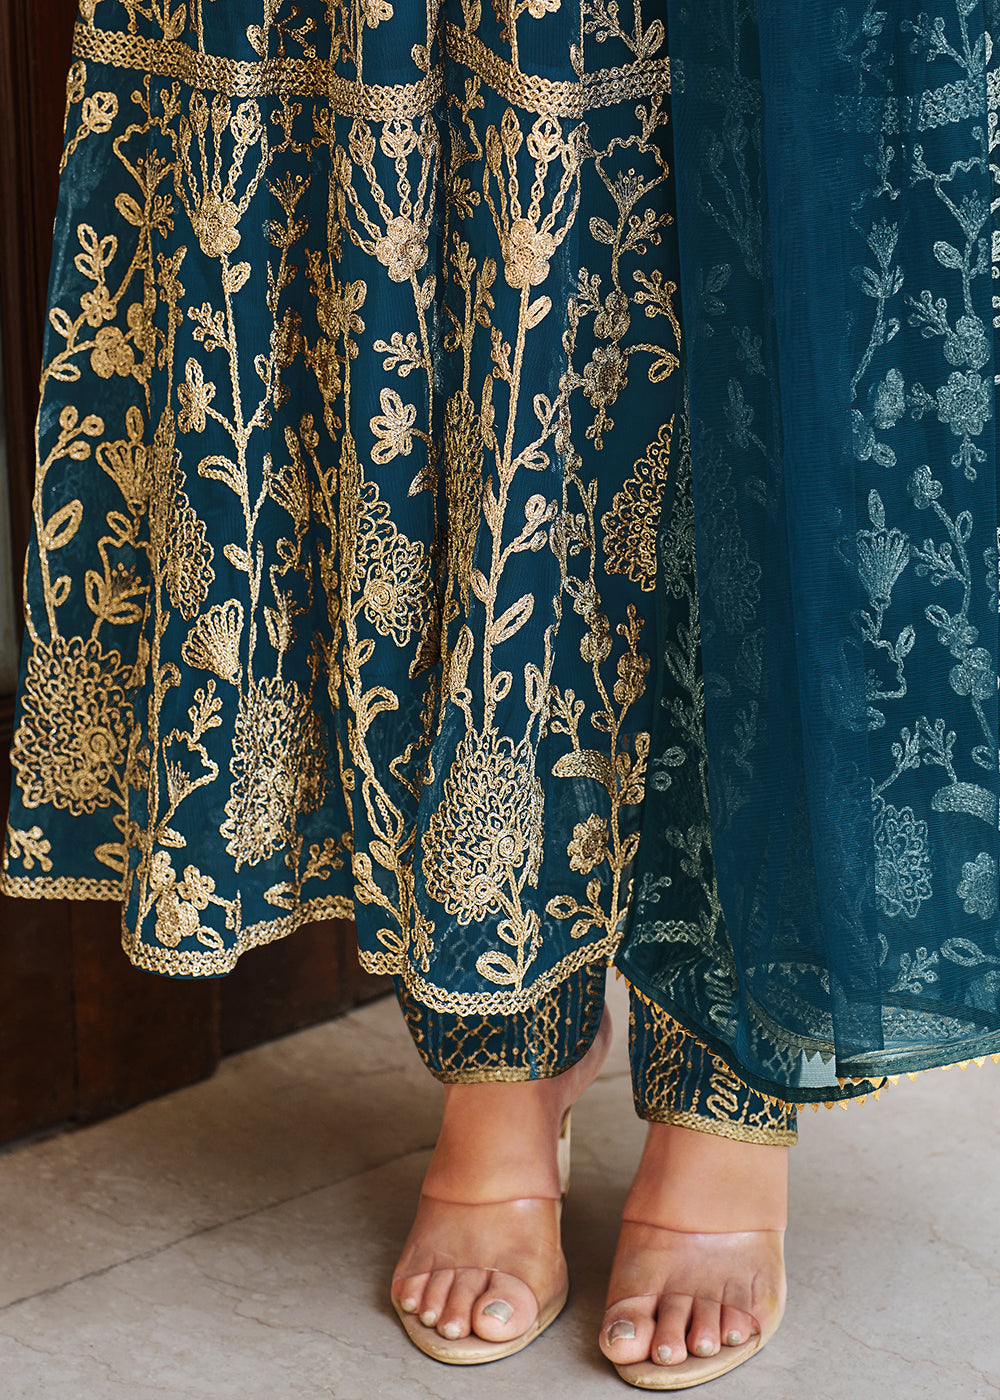 Buy Now Pretty Peacock Blue Designer Front Slit Anarkali Dress Online in USA, UK, Australia, New Zealand, Canada & Worldwide at Empress Clothing.